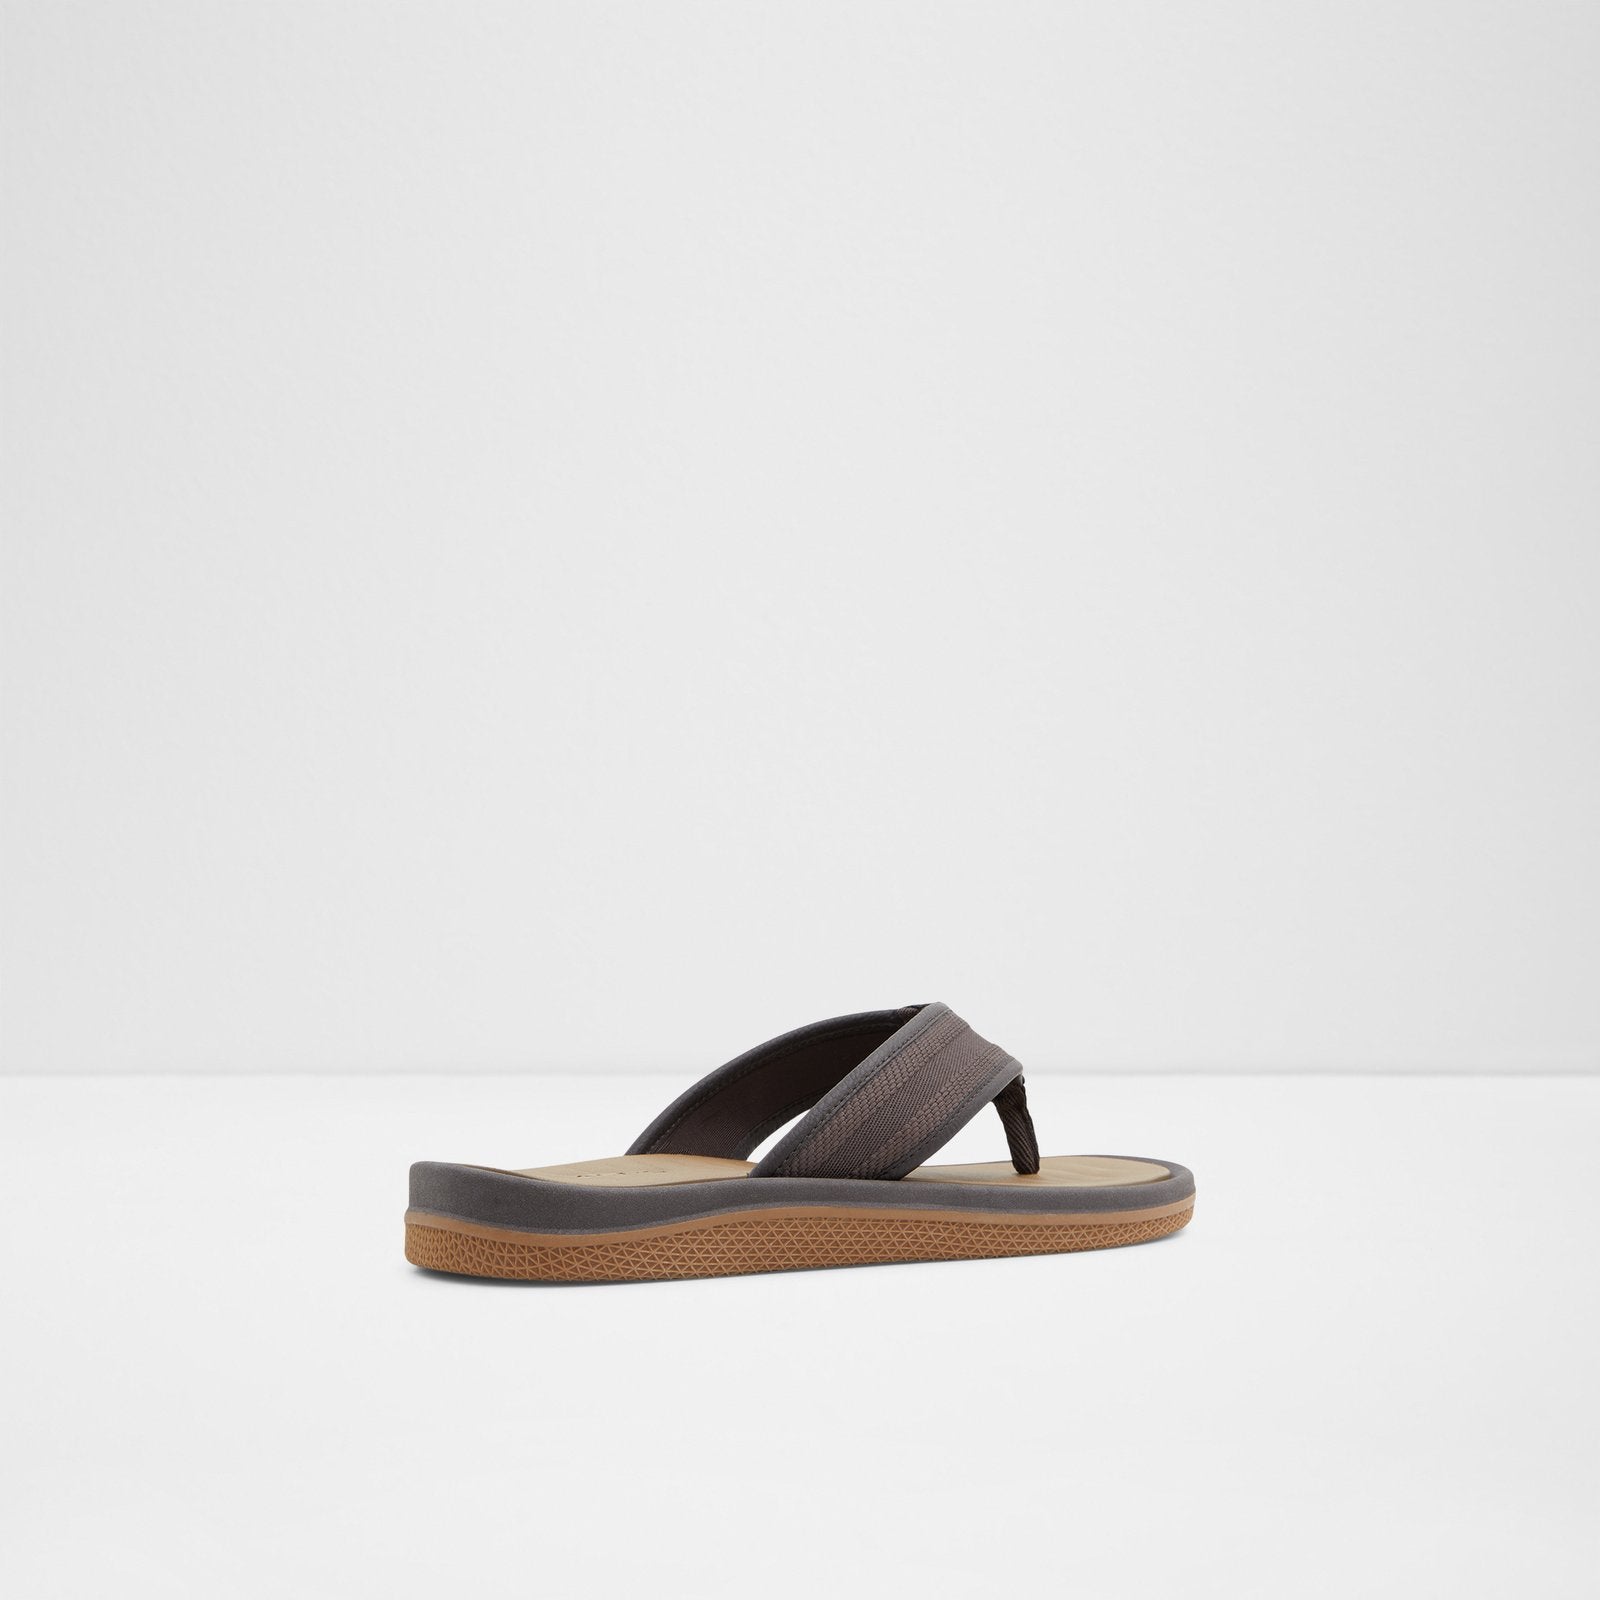 Ocerrach / Flat Sandals Men Shoes - Dark Brown - ALDO KSA